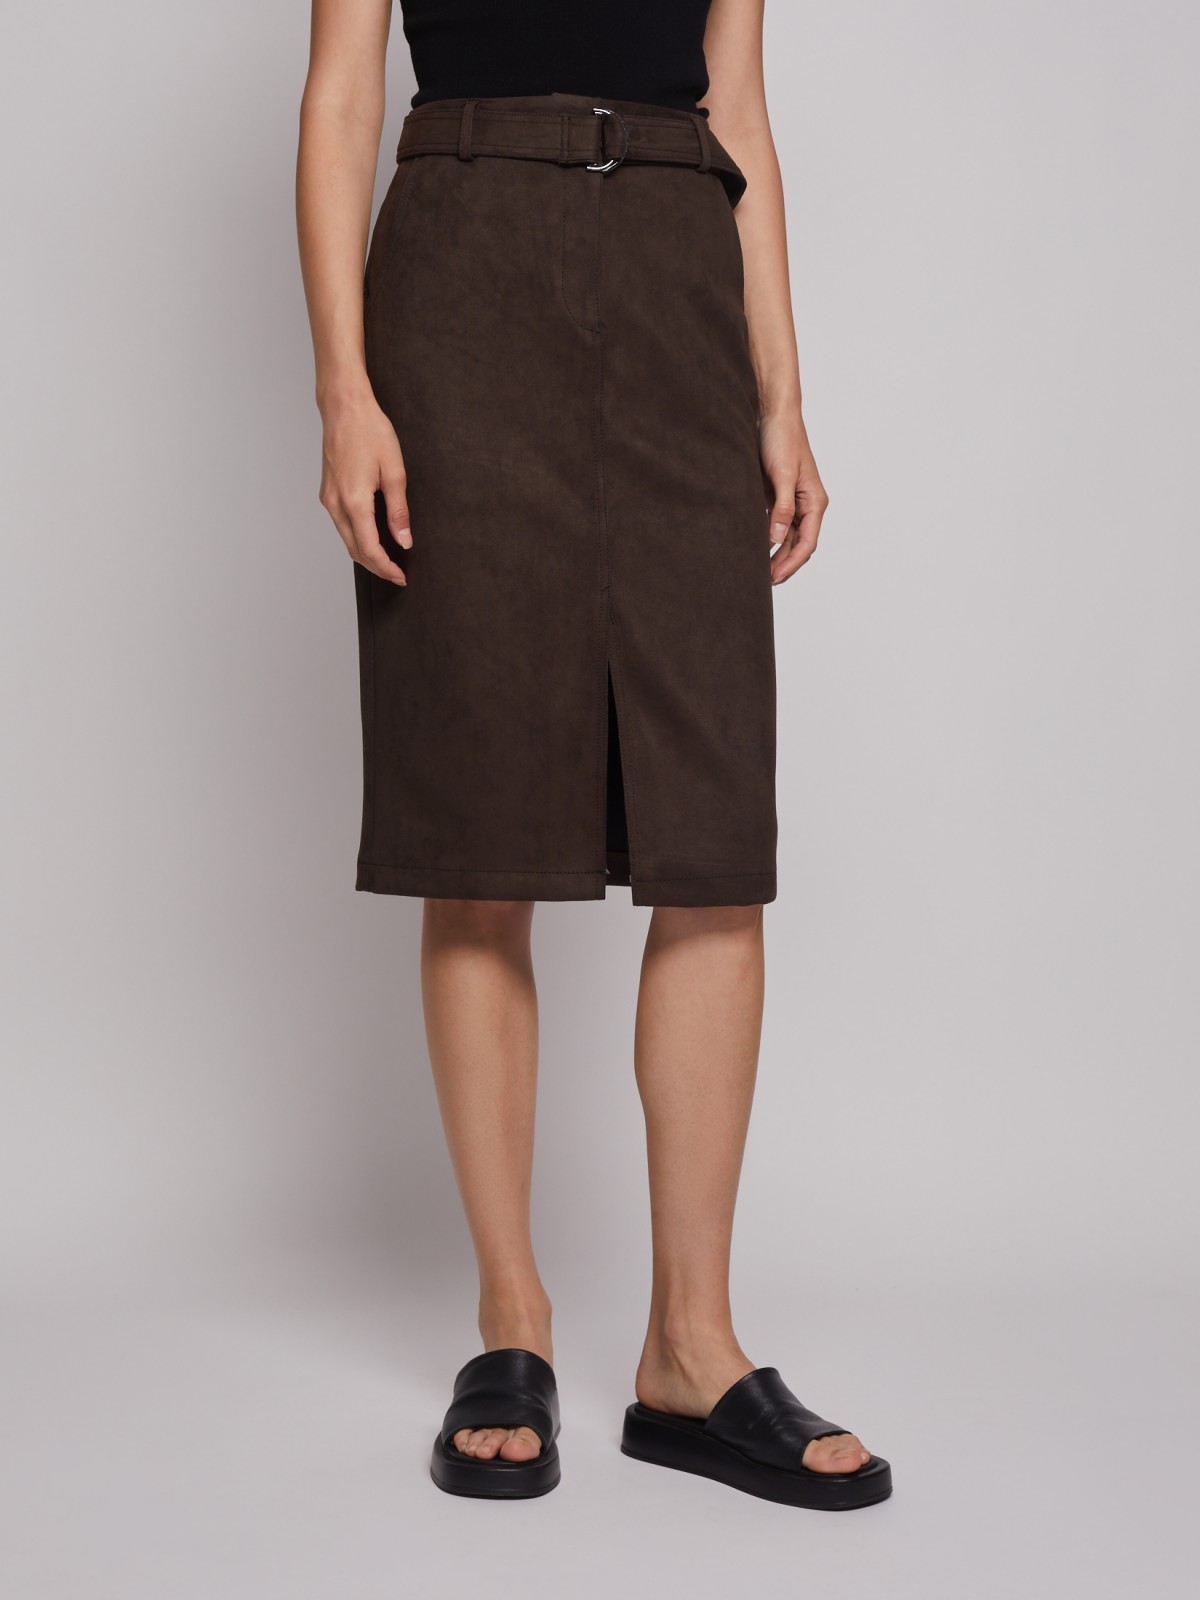 Замшевая юбка-карандаш zolla 222337831013, цвет коричневый, размер XS - фото 3